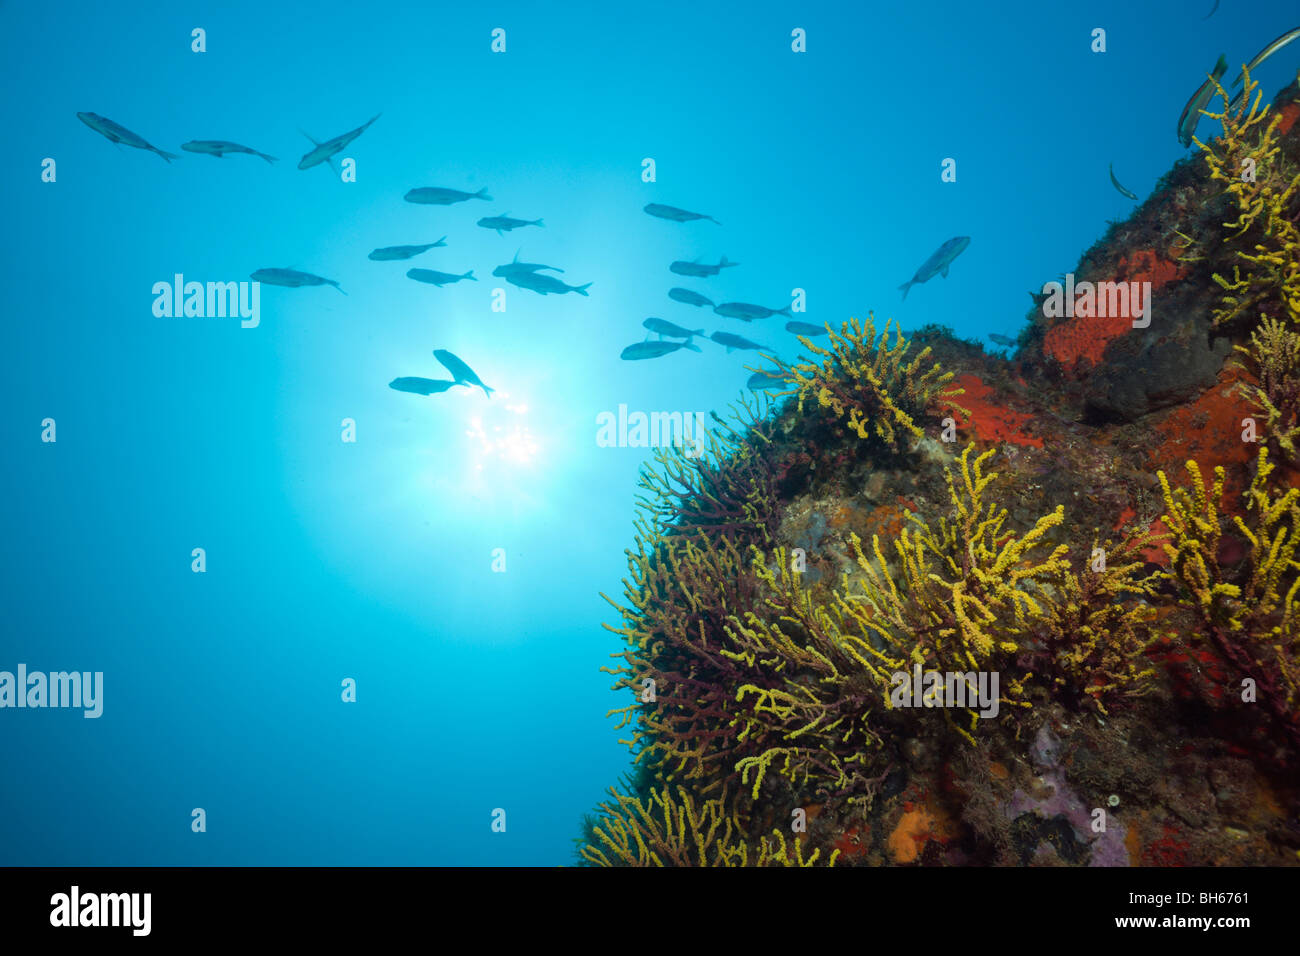 Reef with Shoal of Two-banded Breams, Diplodus vulgaris, Tamariu, Costa Brava, Mediterranean Sea, Spain Stock Photo